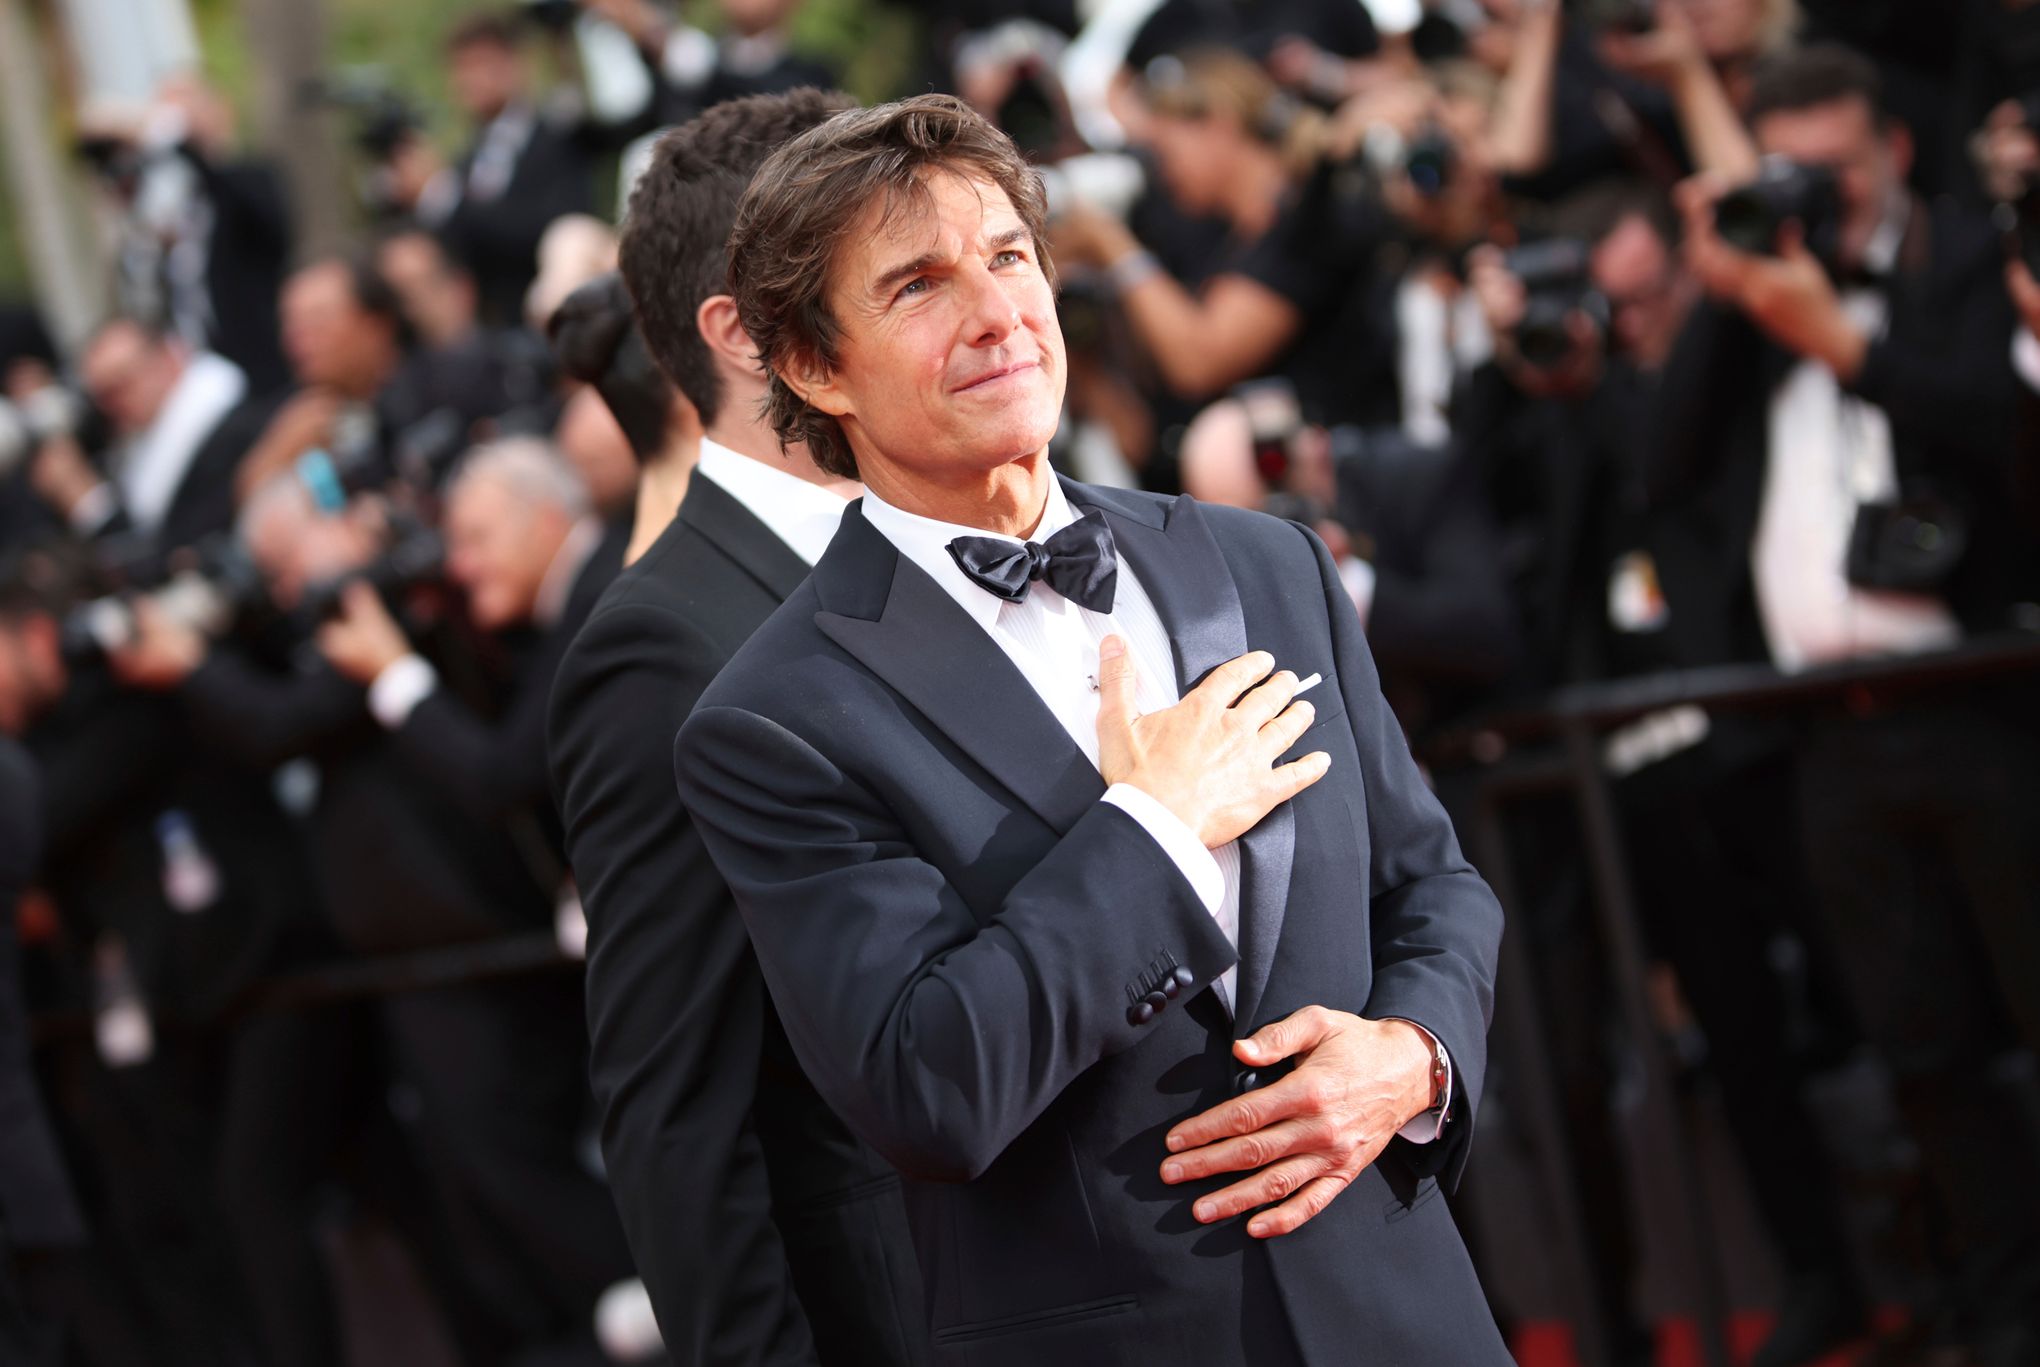 Top Gun: Maverick — Tom Cruise has made the film of his career at 59